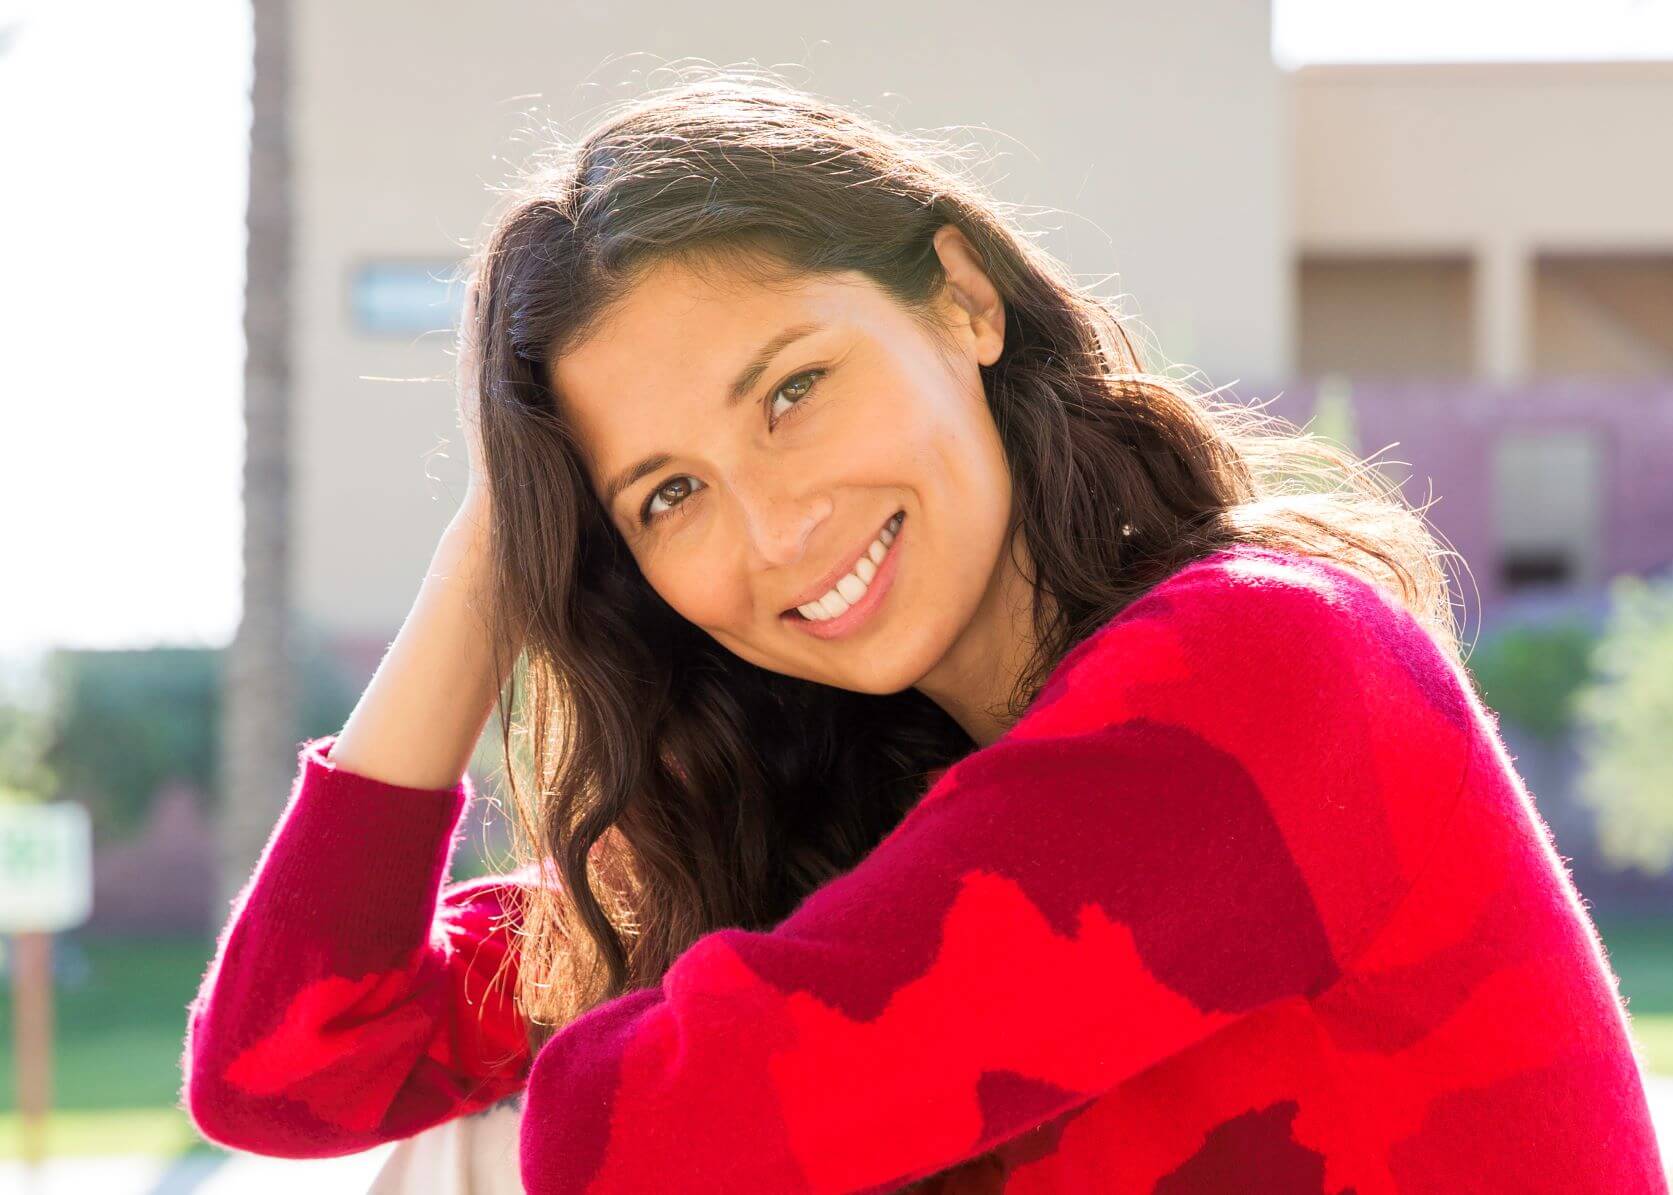 Jasmine Hemsley smiling in a red jumper